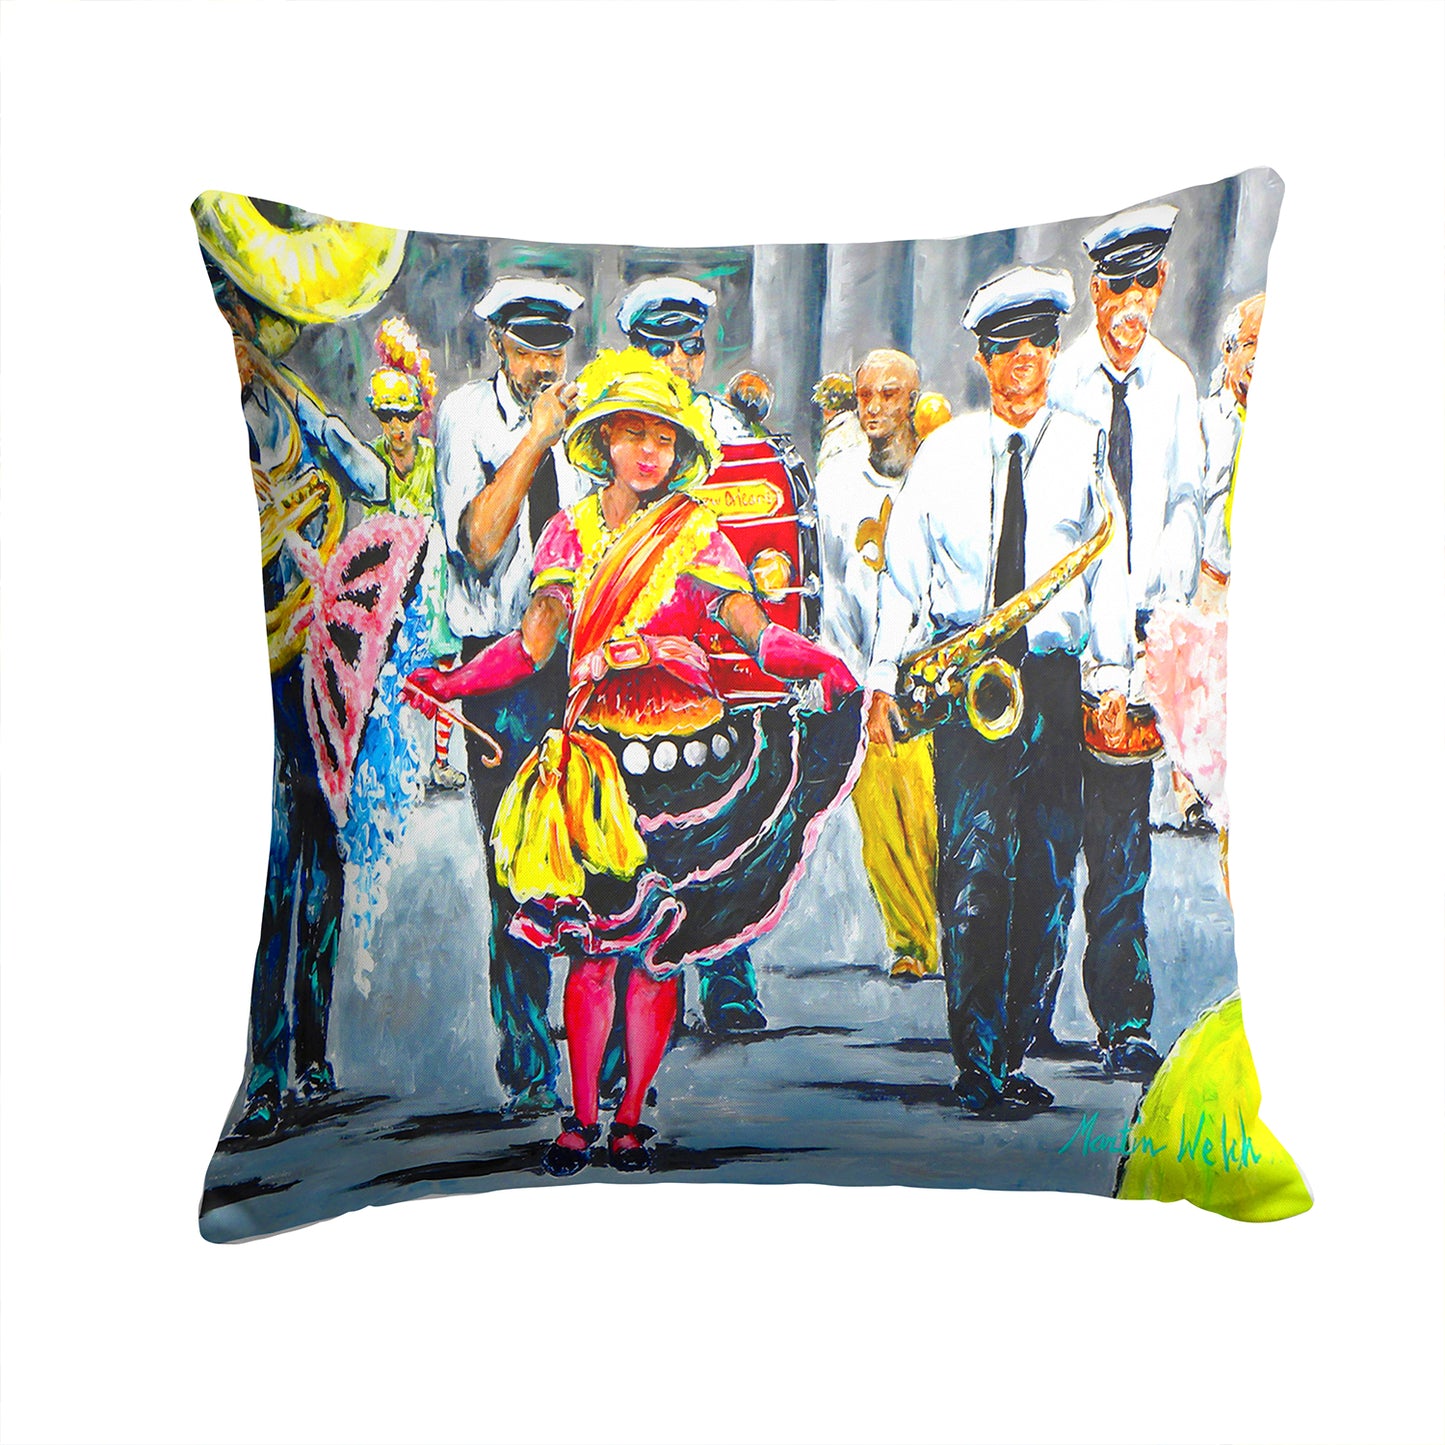 Buy this Mardi Gras Dancin' in the Street Fabric Decorative Pillow